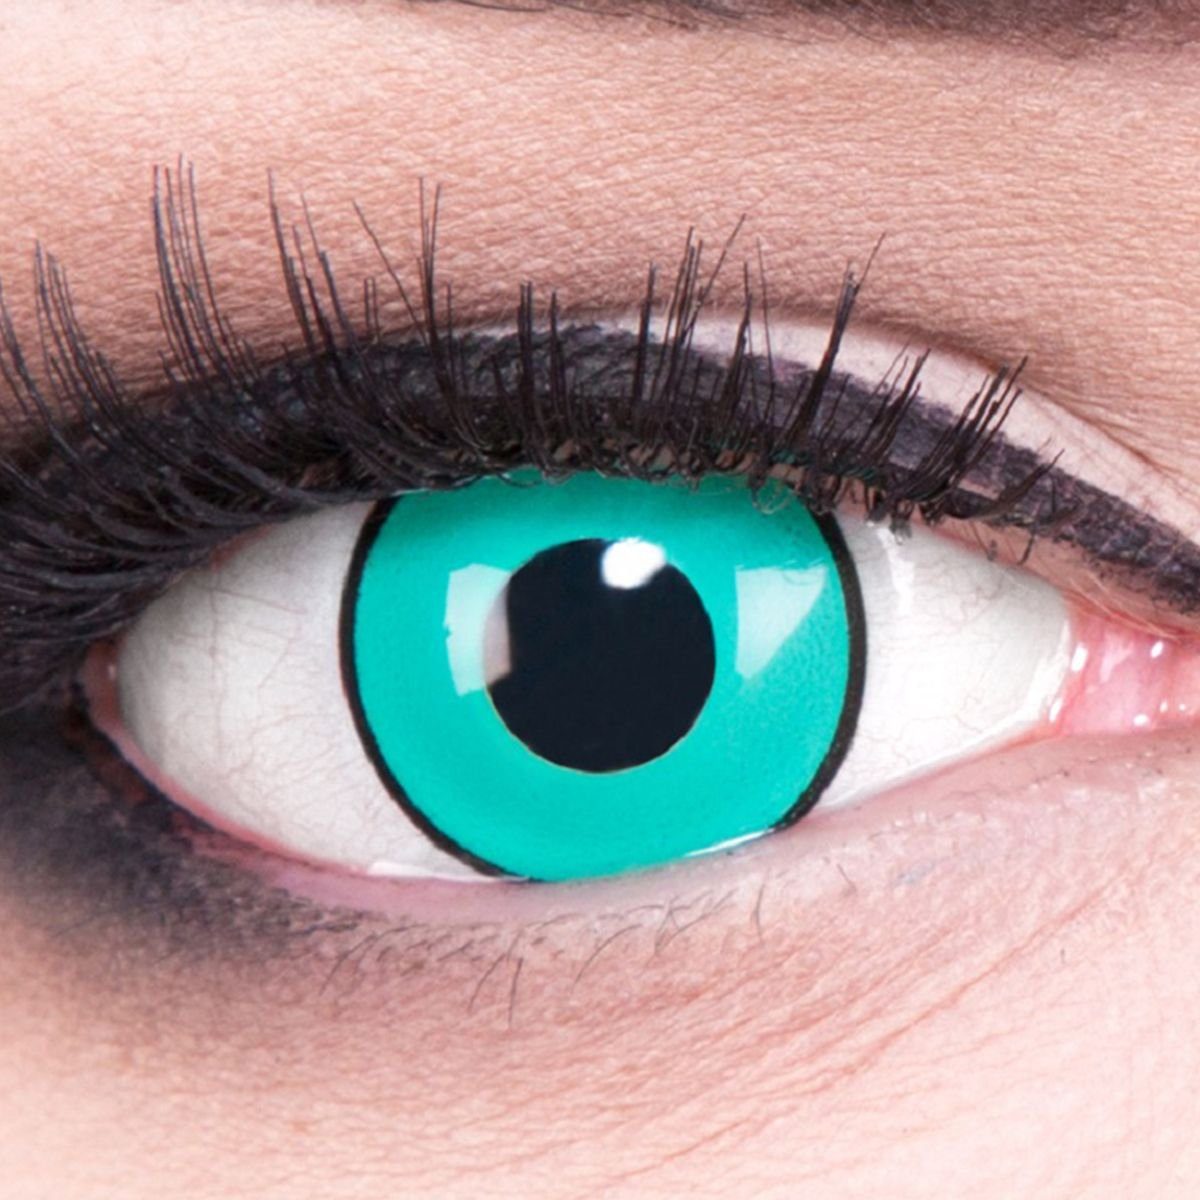 MeralenS Jahreslinsen 1 Paar Farbige Anime Sharingan Kontaktlinsen Gaara in türkis schwarz